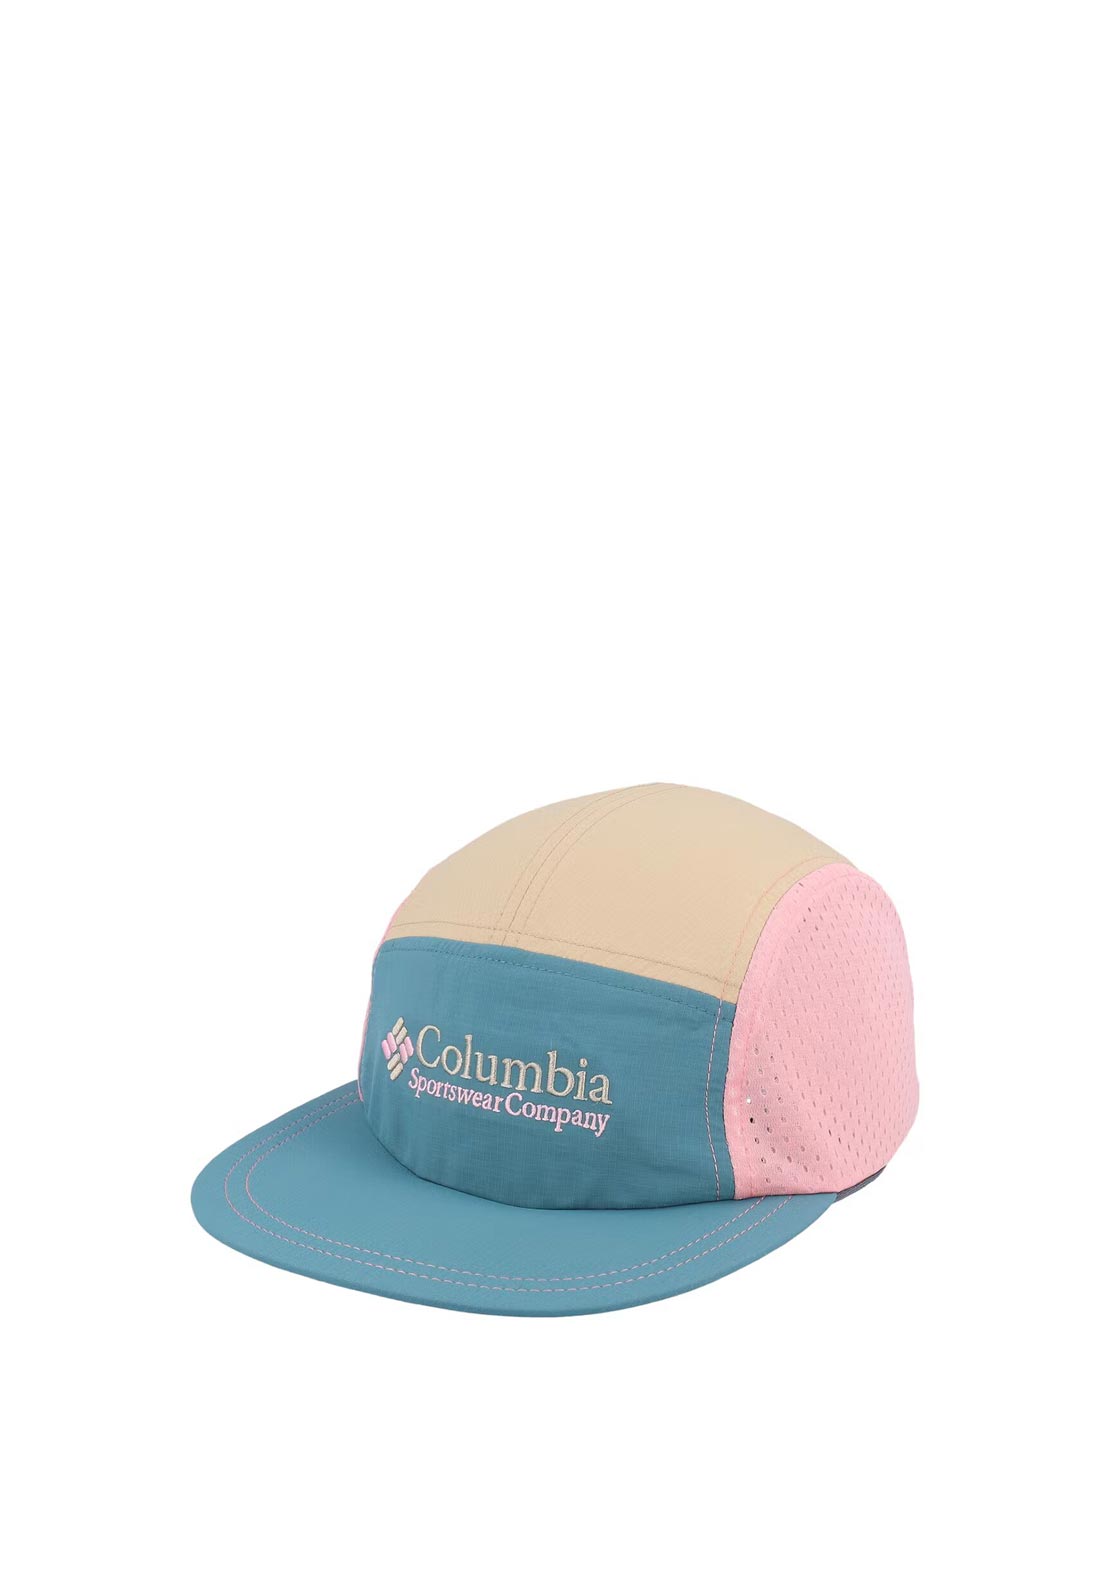 Columbia Wingmark Cap - Buy now